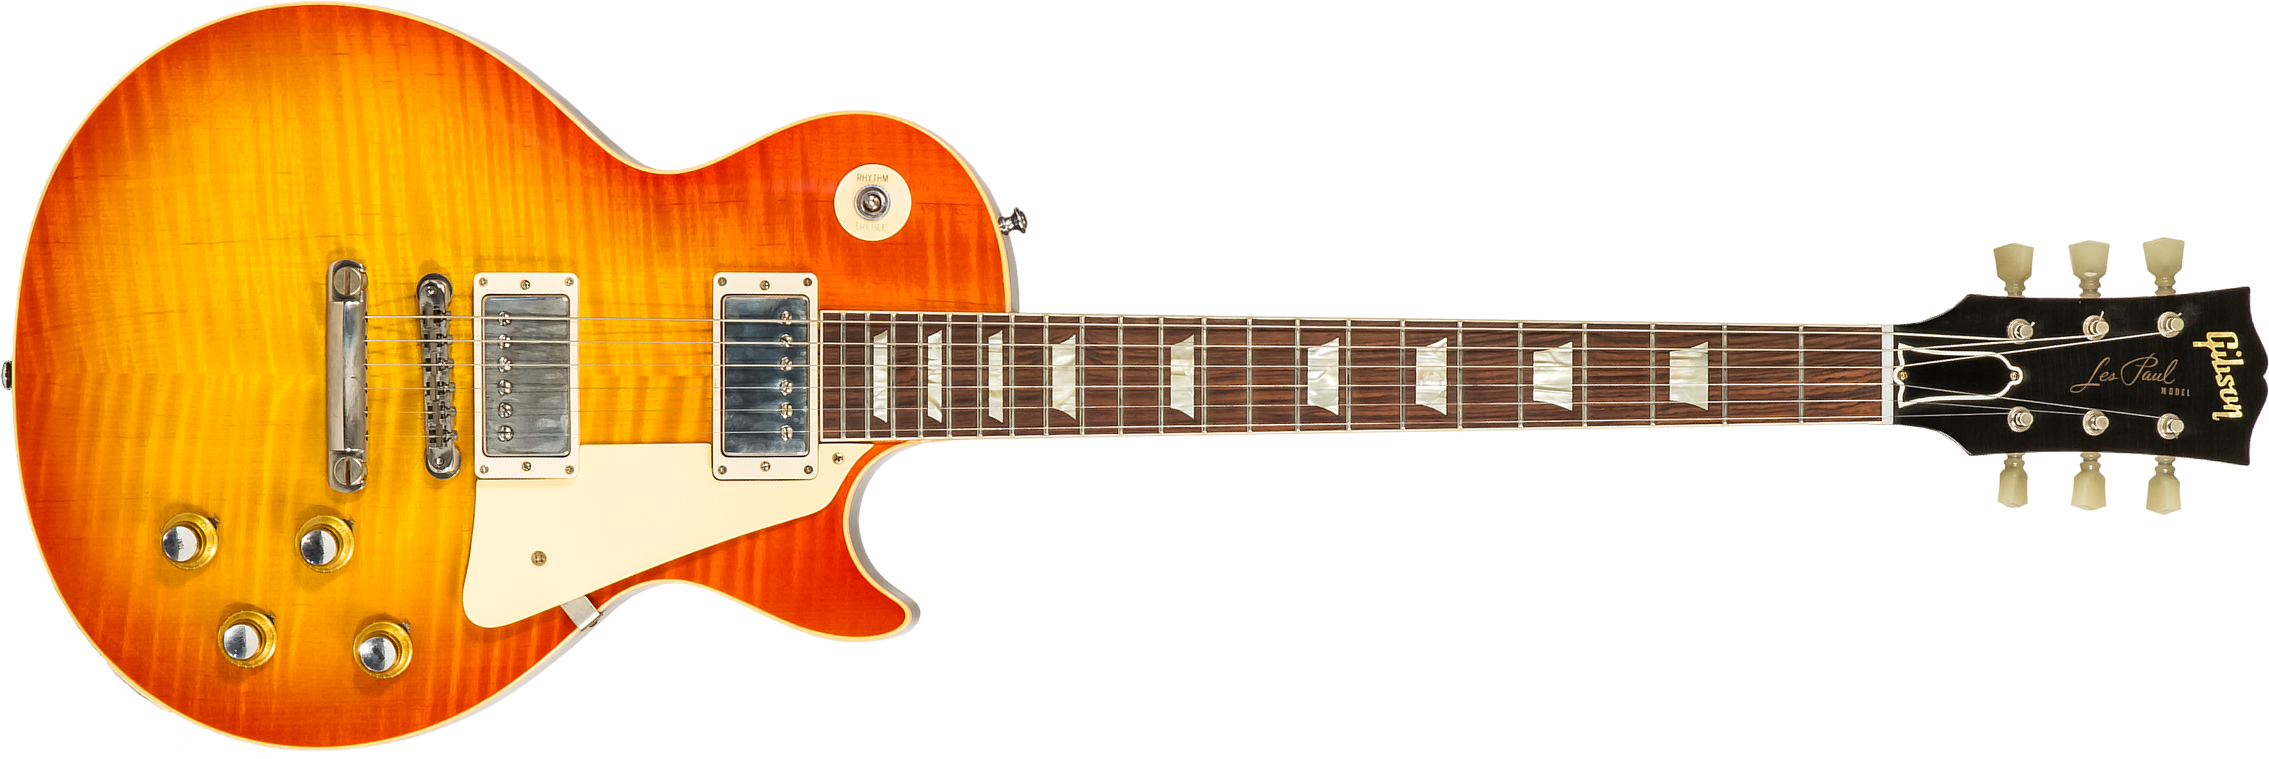 Gibson Custom Shop Murphy Lab Les Paul Standard 1960 Reissue 2h Ht Rw #001189 - Ultra Light Aged Orange Lemon Fade Burst - Enkel gesneden elektrische 